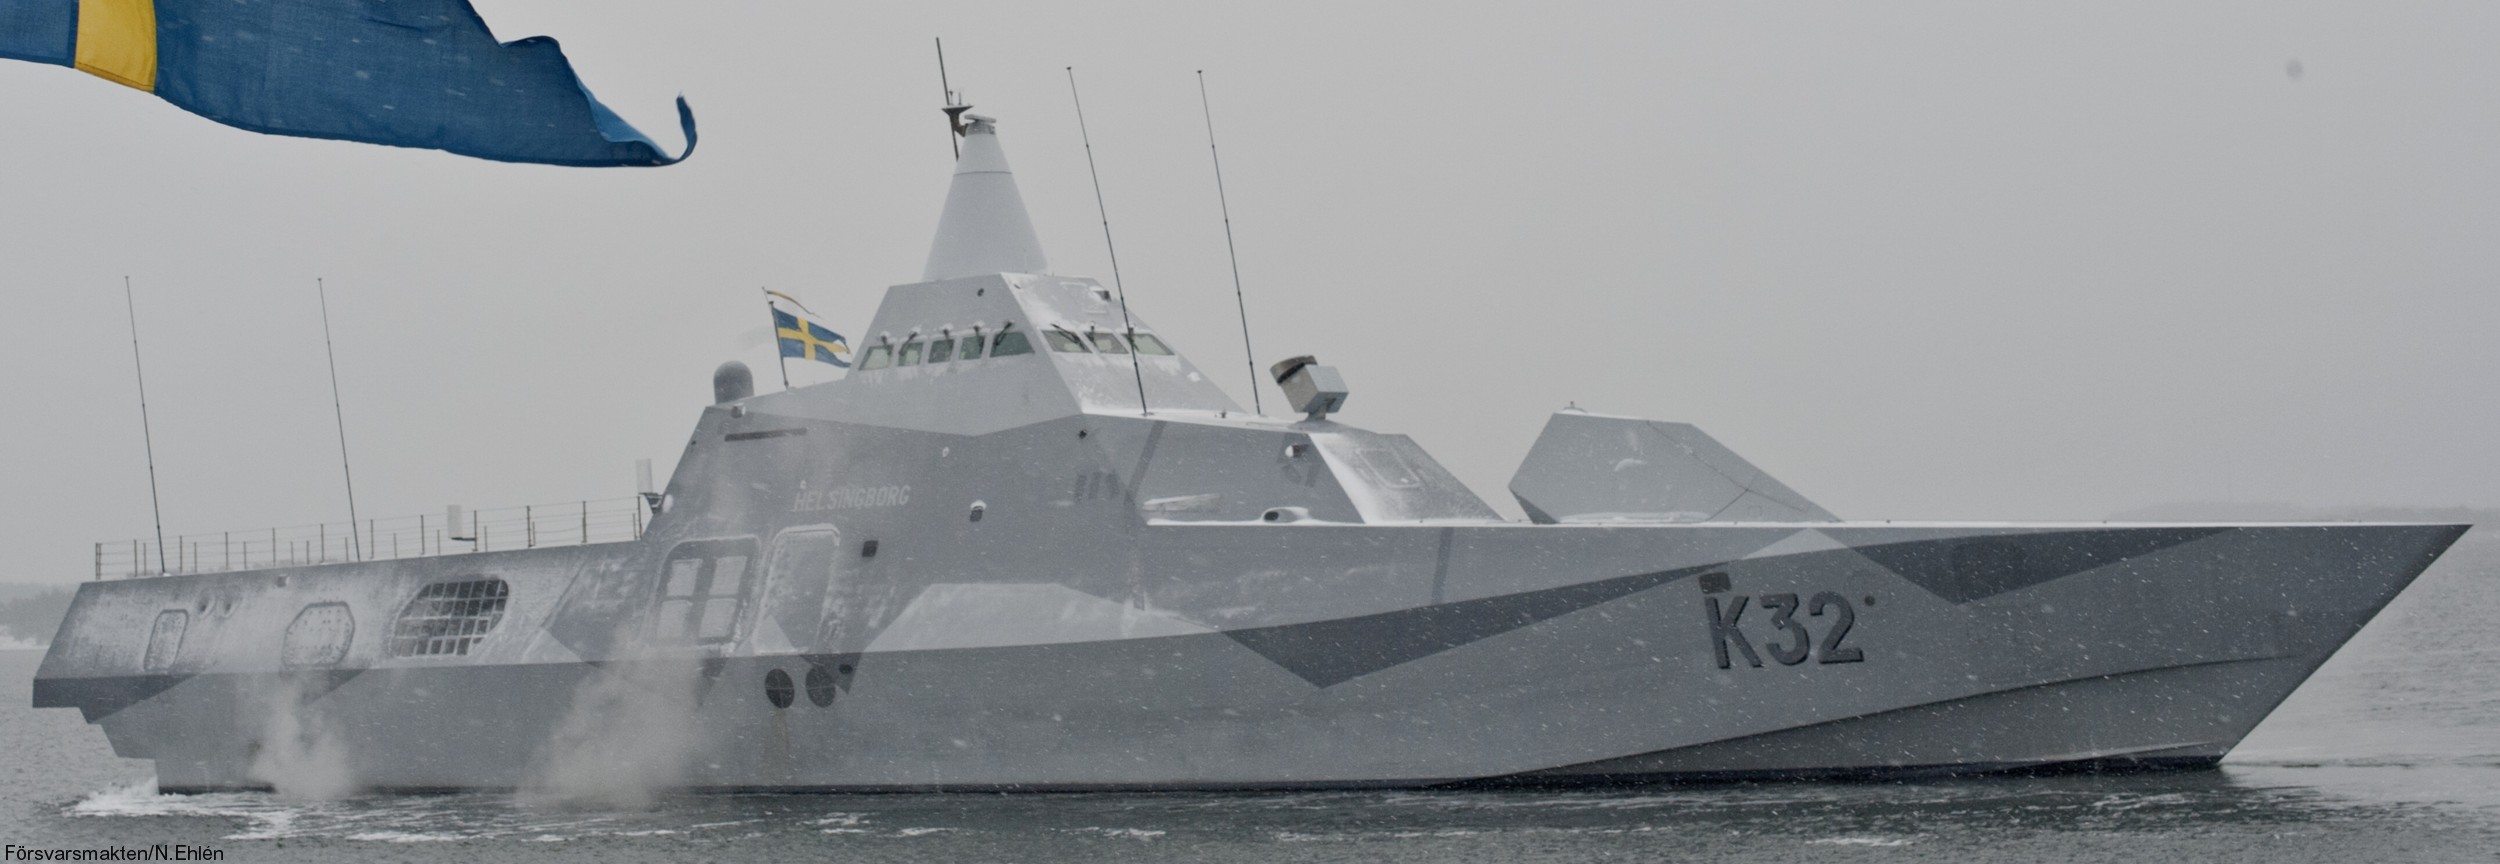 k32 hswms hms helsingborg visby class corvette royal swedish navy svenska marinen 04